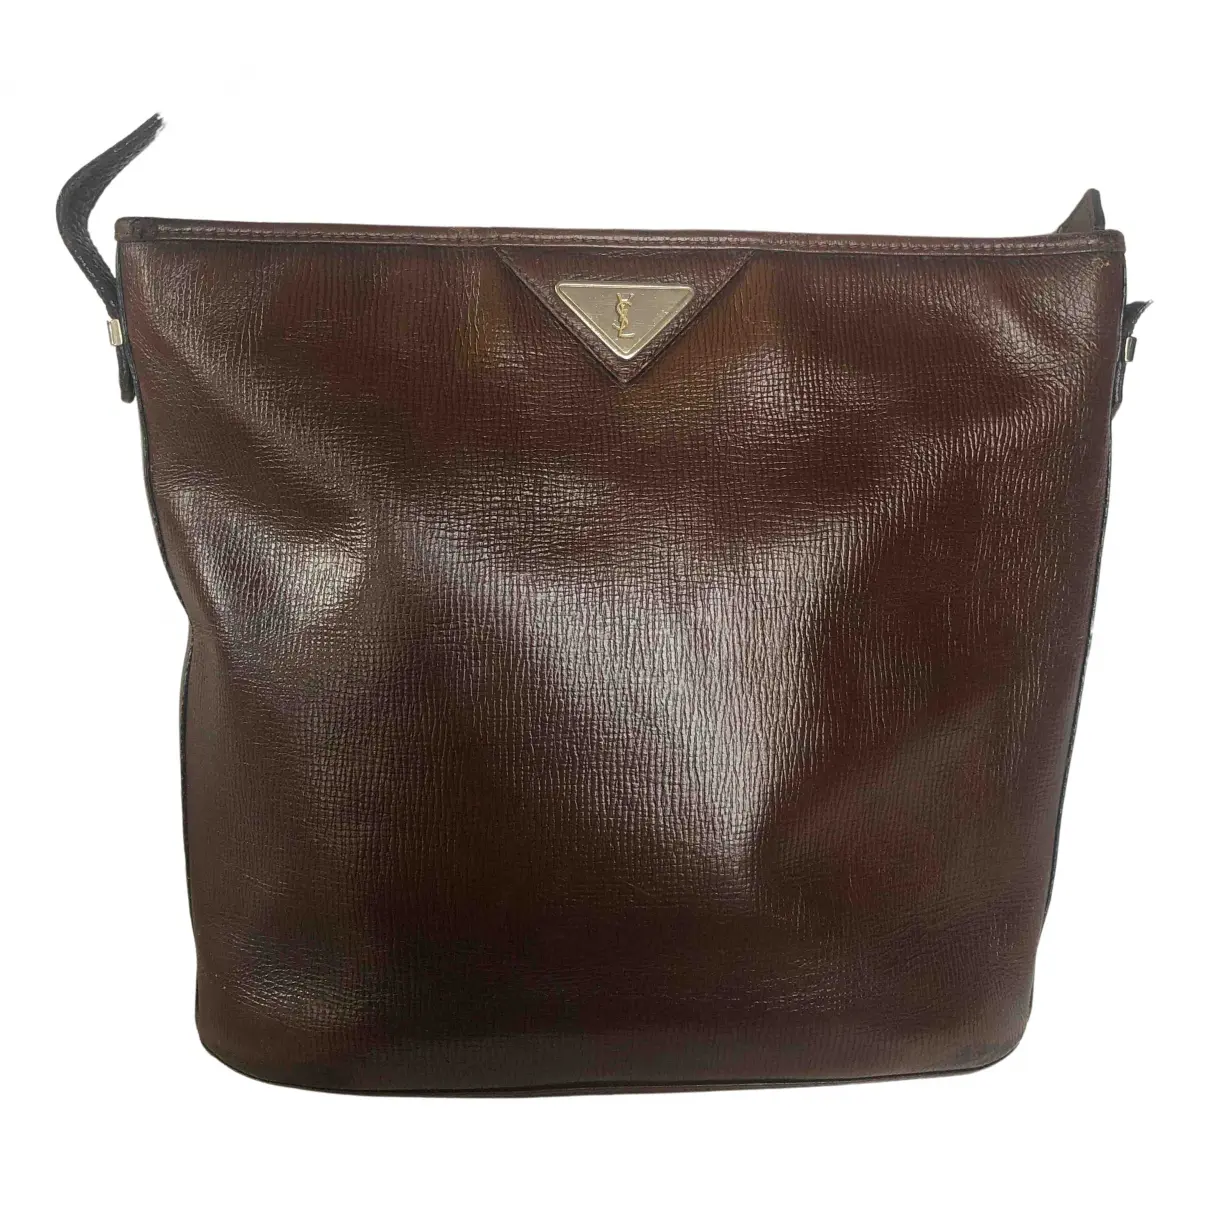 Leather crossbody bag Yves Saint Laurent